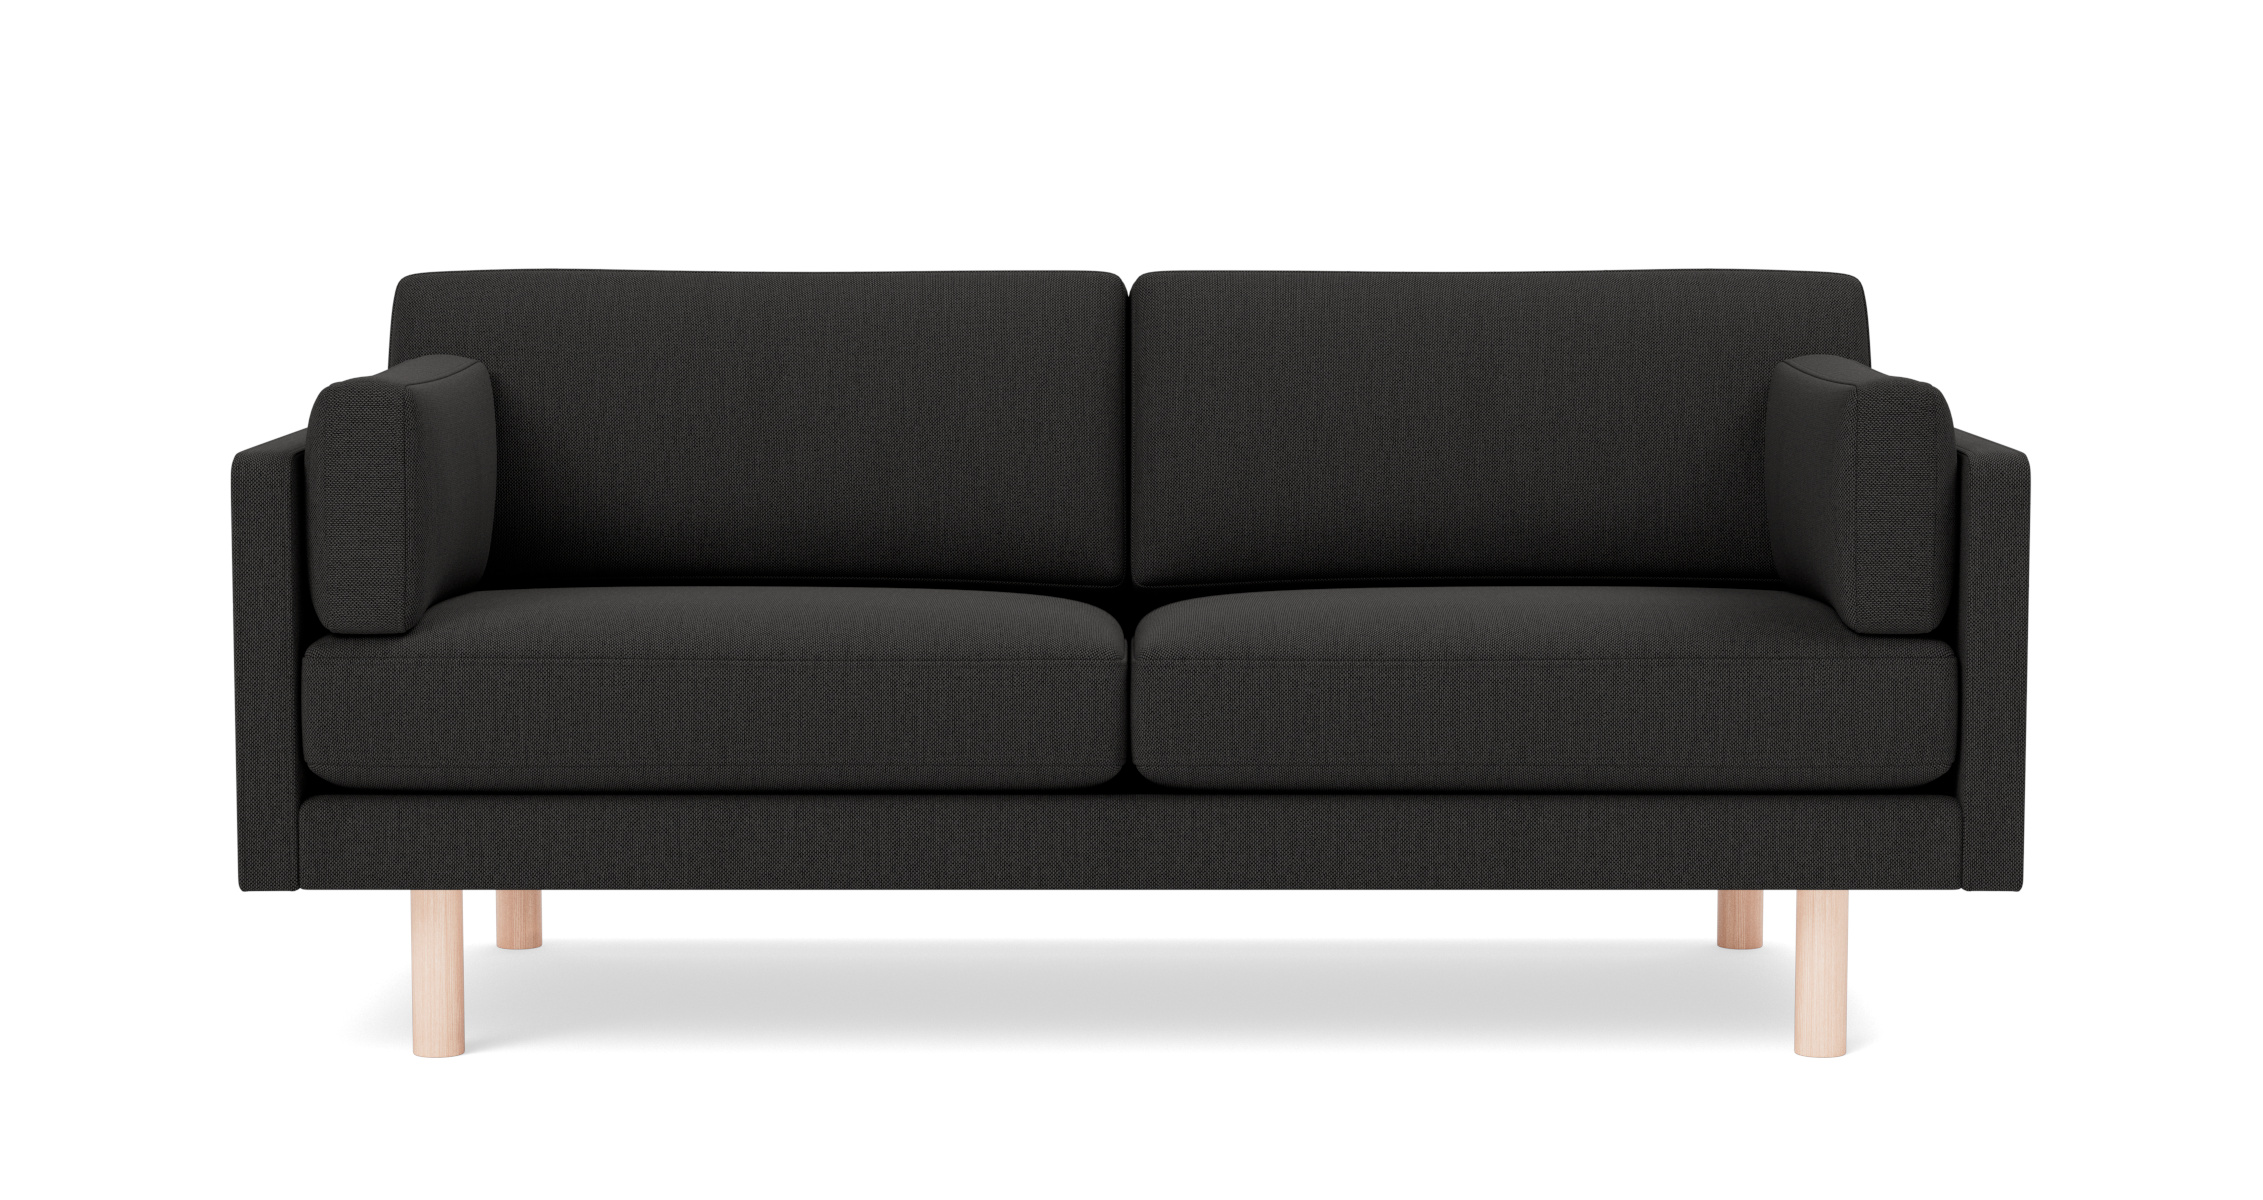 EJ220 Sofa 2-Sitzer, 76 cm, eiche geseift / erik, 3790 linen